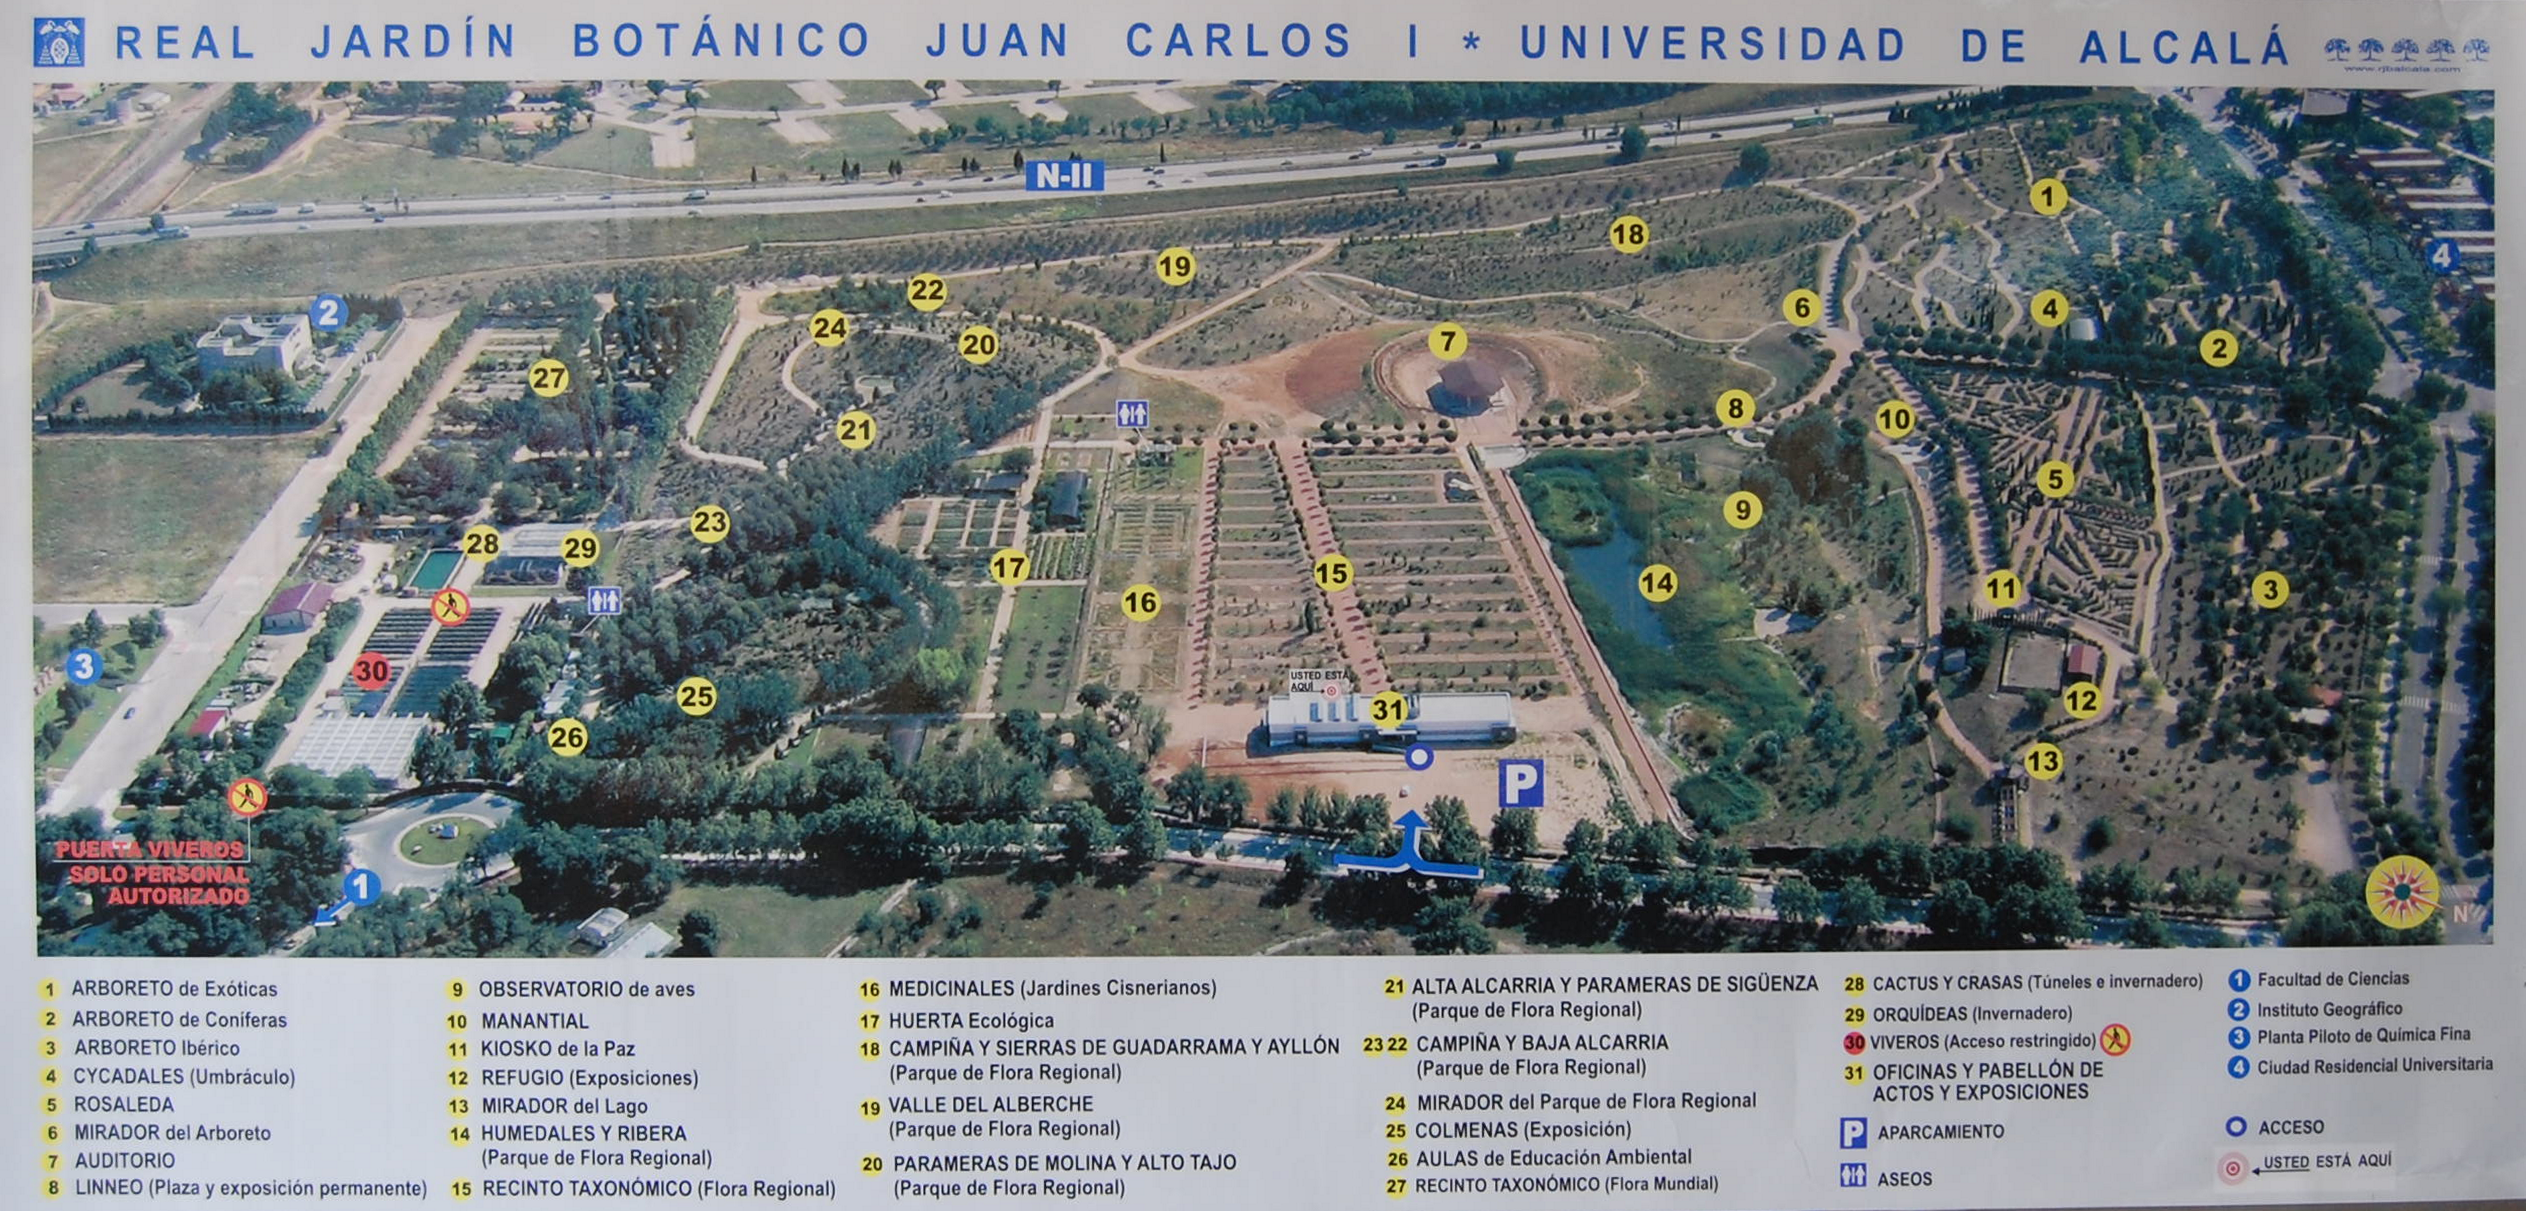 Real Jardn Botánico Juan Carlos I RPS 07 06 2014 plano general